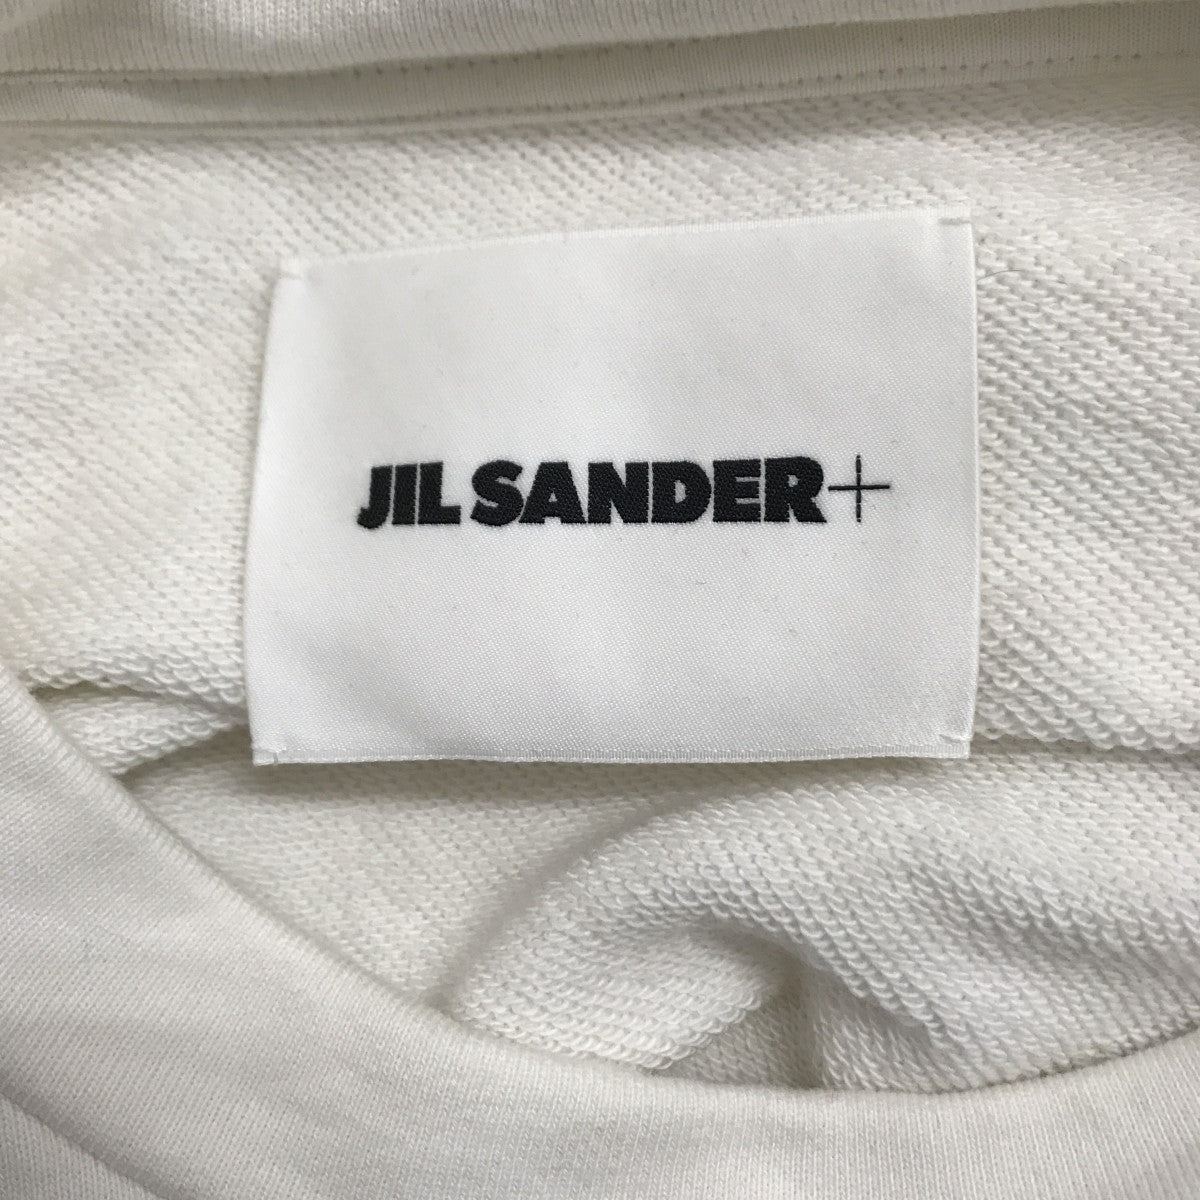 JIL SANDER+(ジルサンダープラス) ロゴプリント クルーネックスウェット JPUS707532